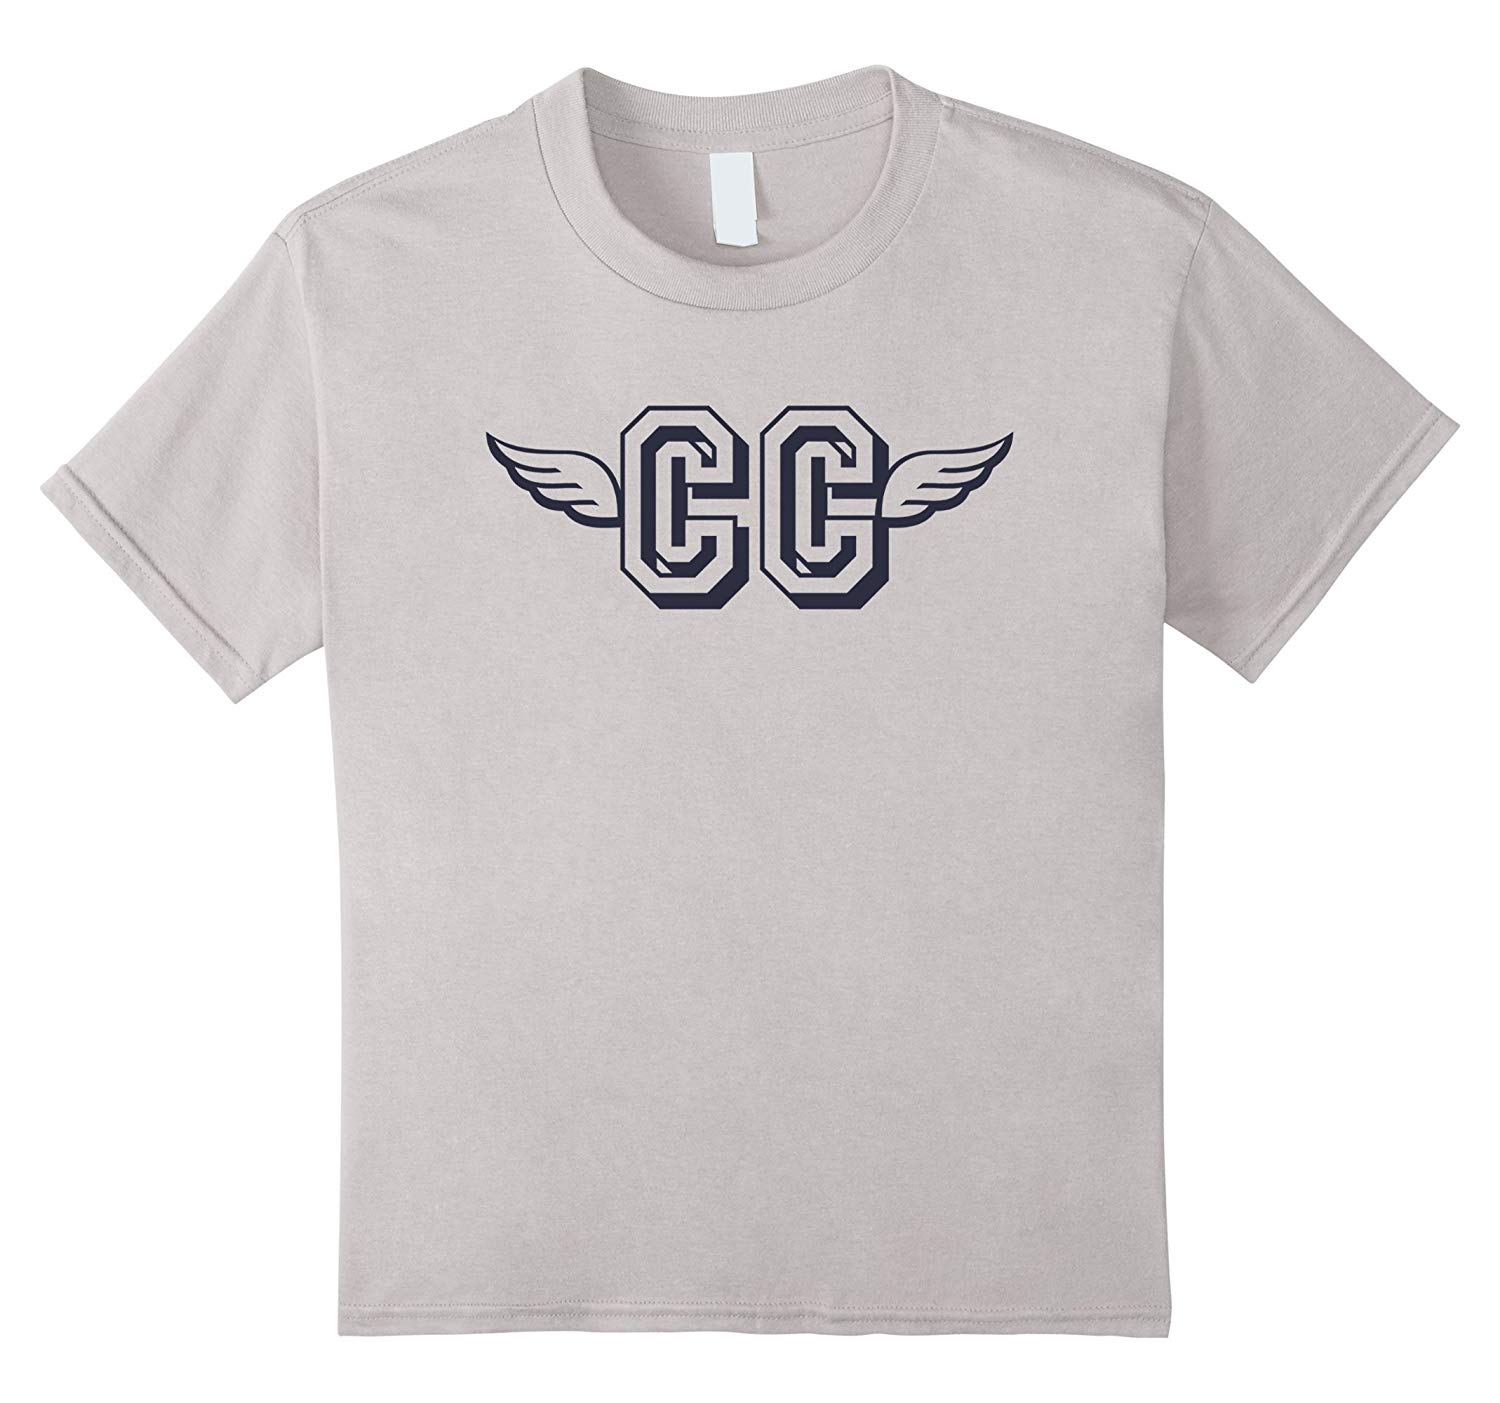 Cross Country CC Logo - Retro CC Cross Country Running Wings Logo T Shirt: Clothing